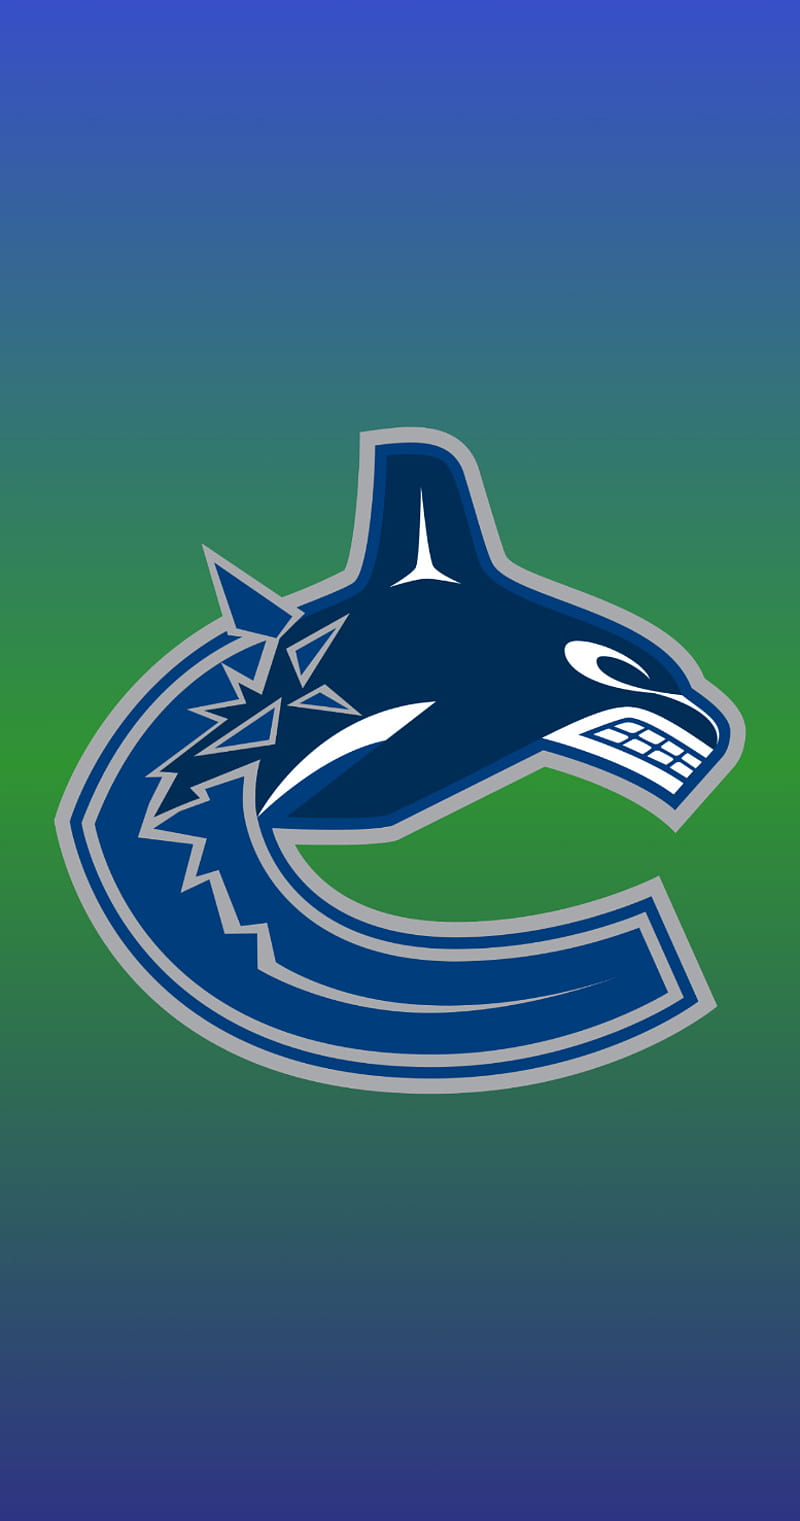 Vancouver Canucks (NHL) iPhone X/XS/XR Lock Screen Wallpaper